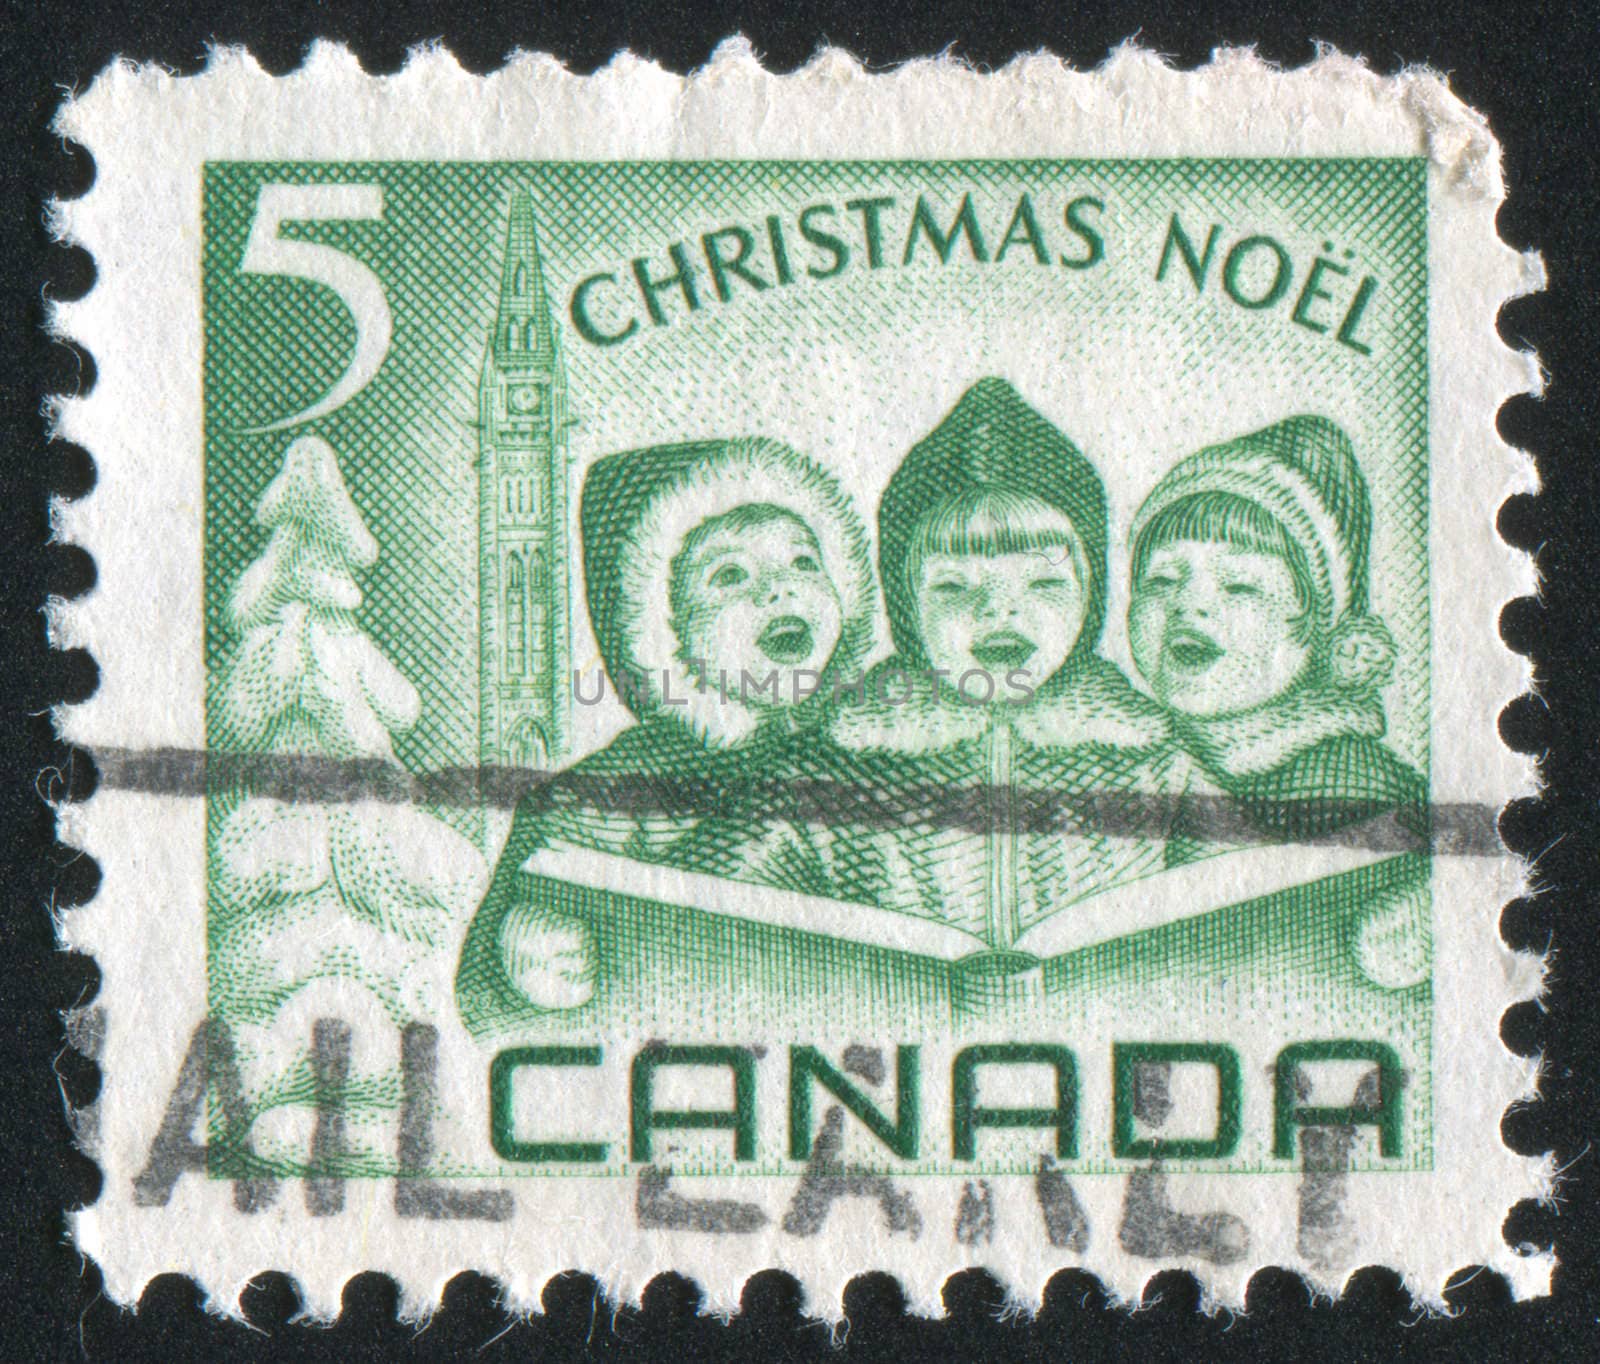 CANADA - CIRCA 1967: stamp printed by Canada, shows Singing Children, circa 1967